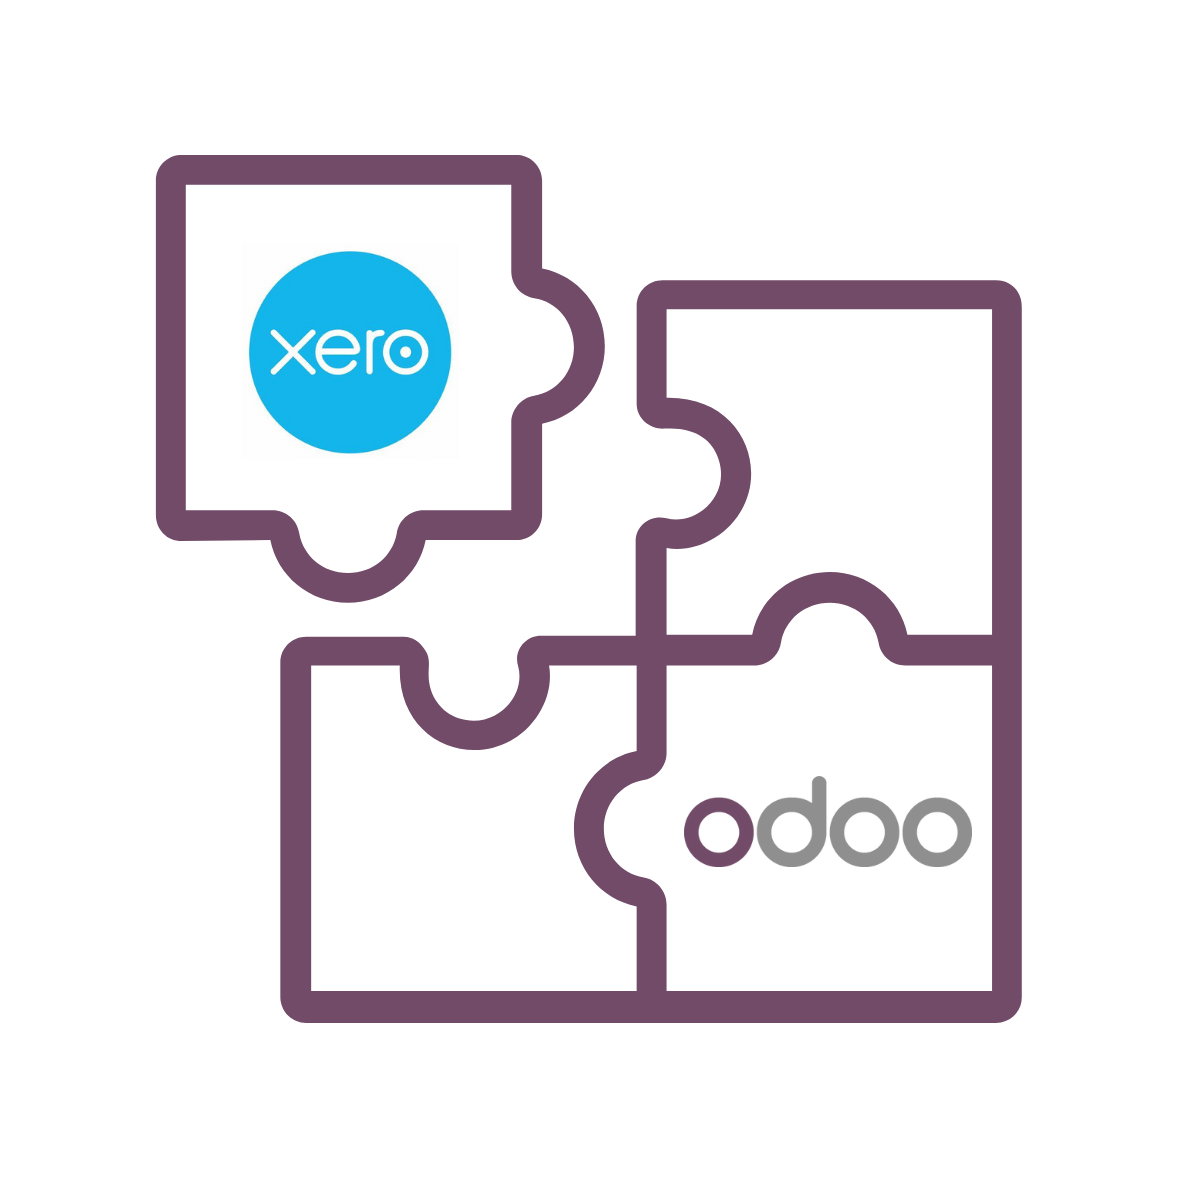 Xero Odoo integration diagram